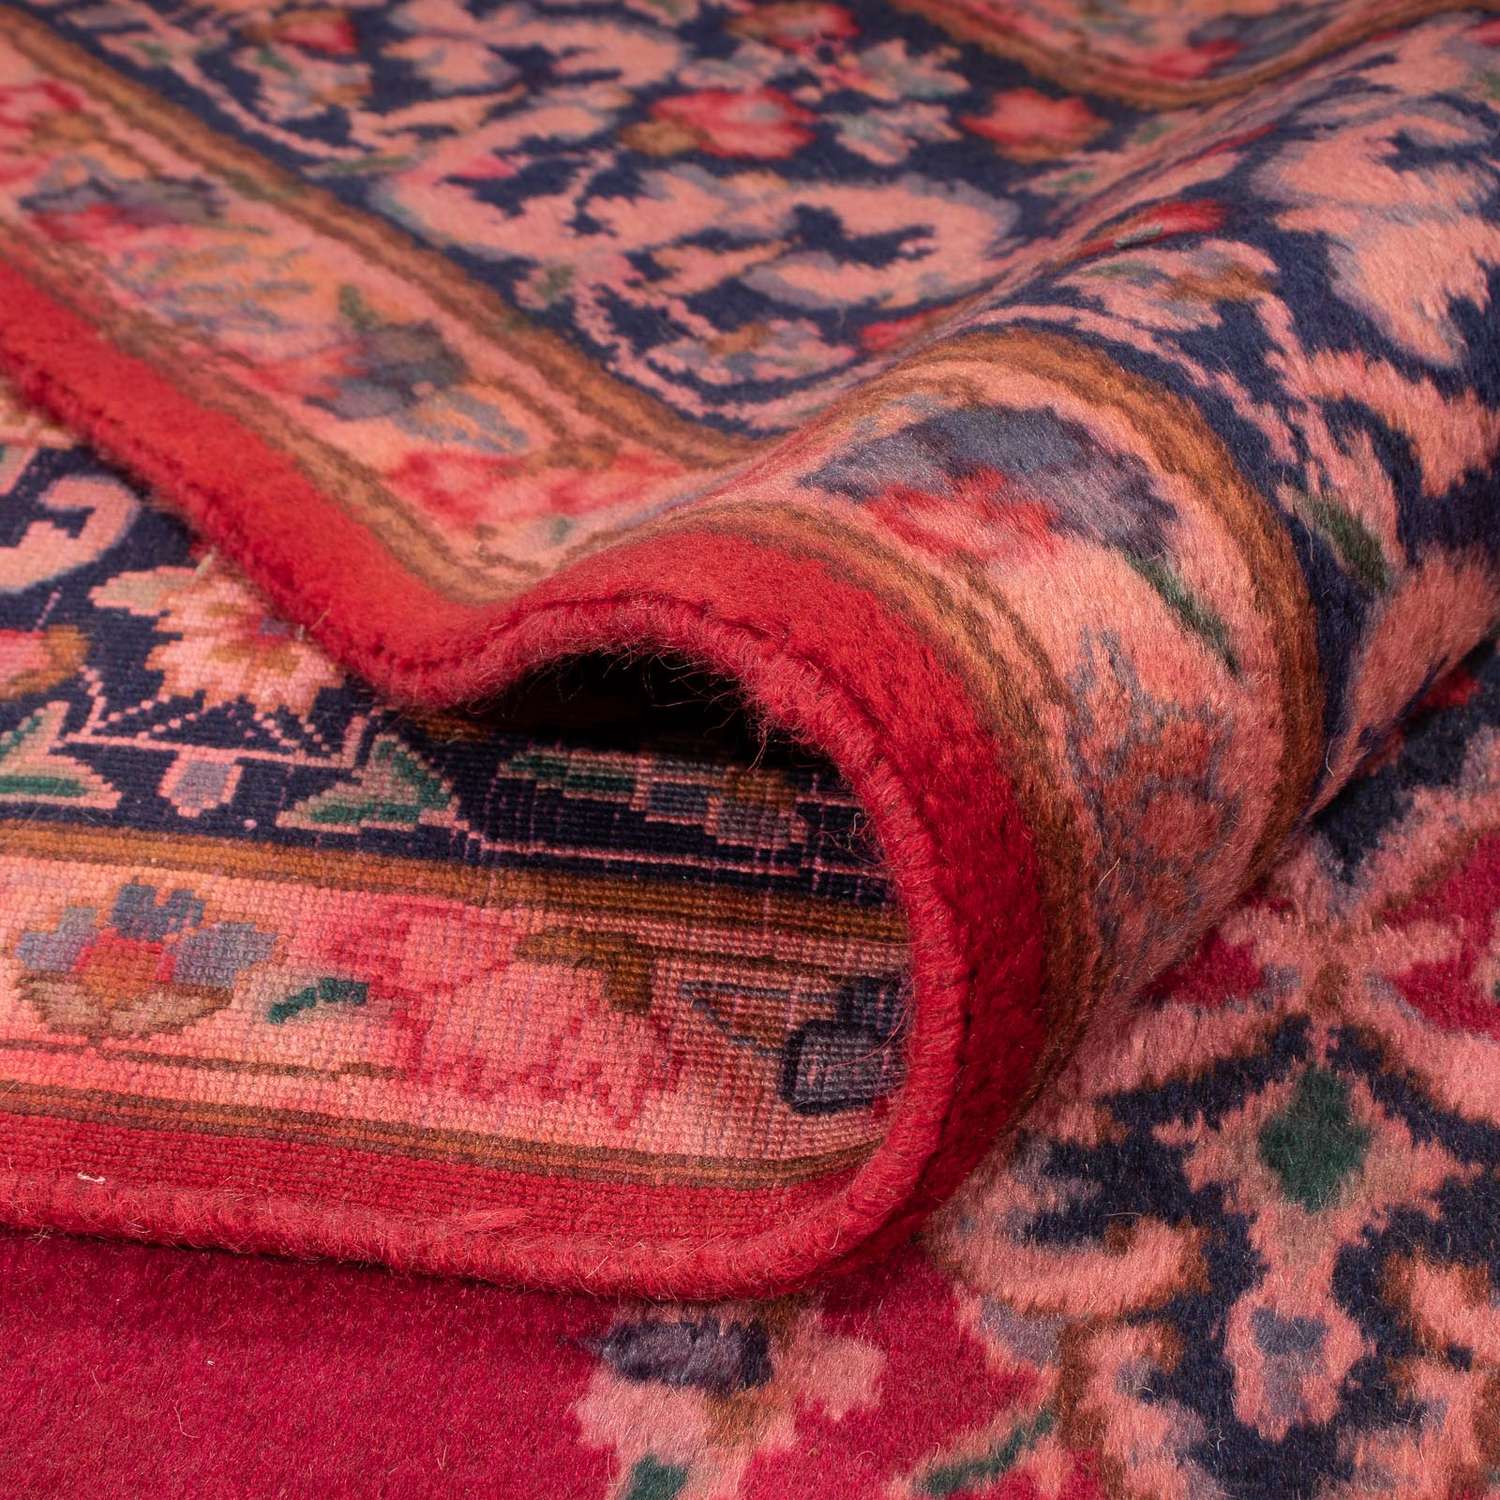 Persisk tæppe - Classic - 330 x 235 cm - rød